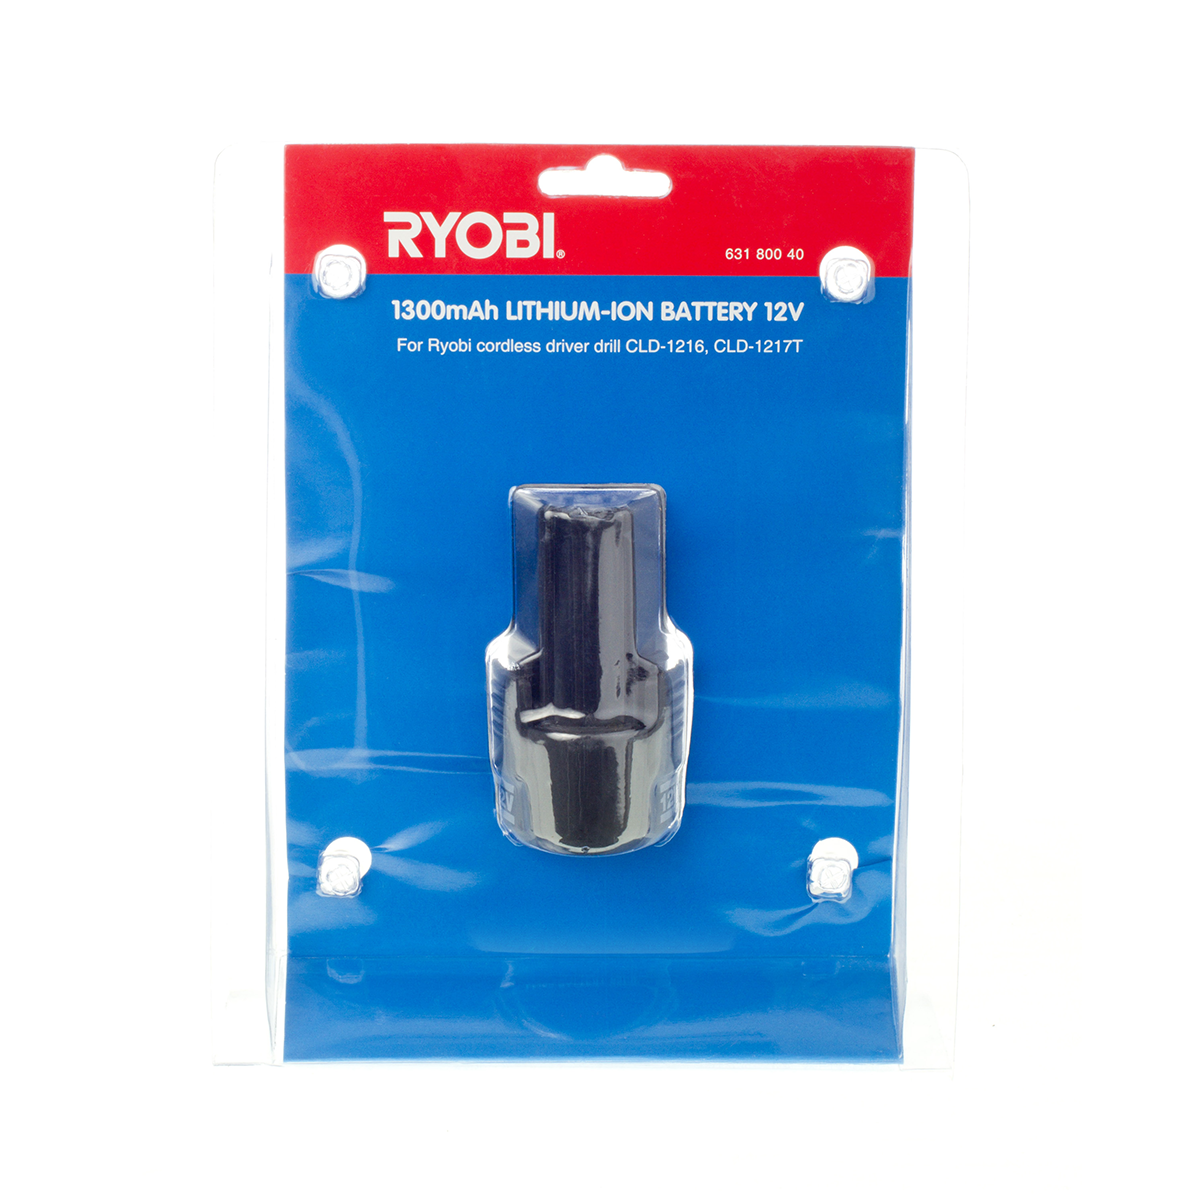 Ryobi Battery: 63180040